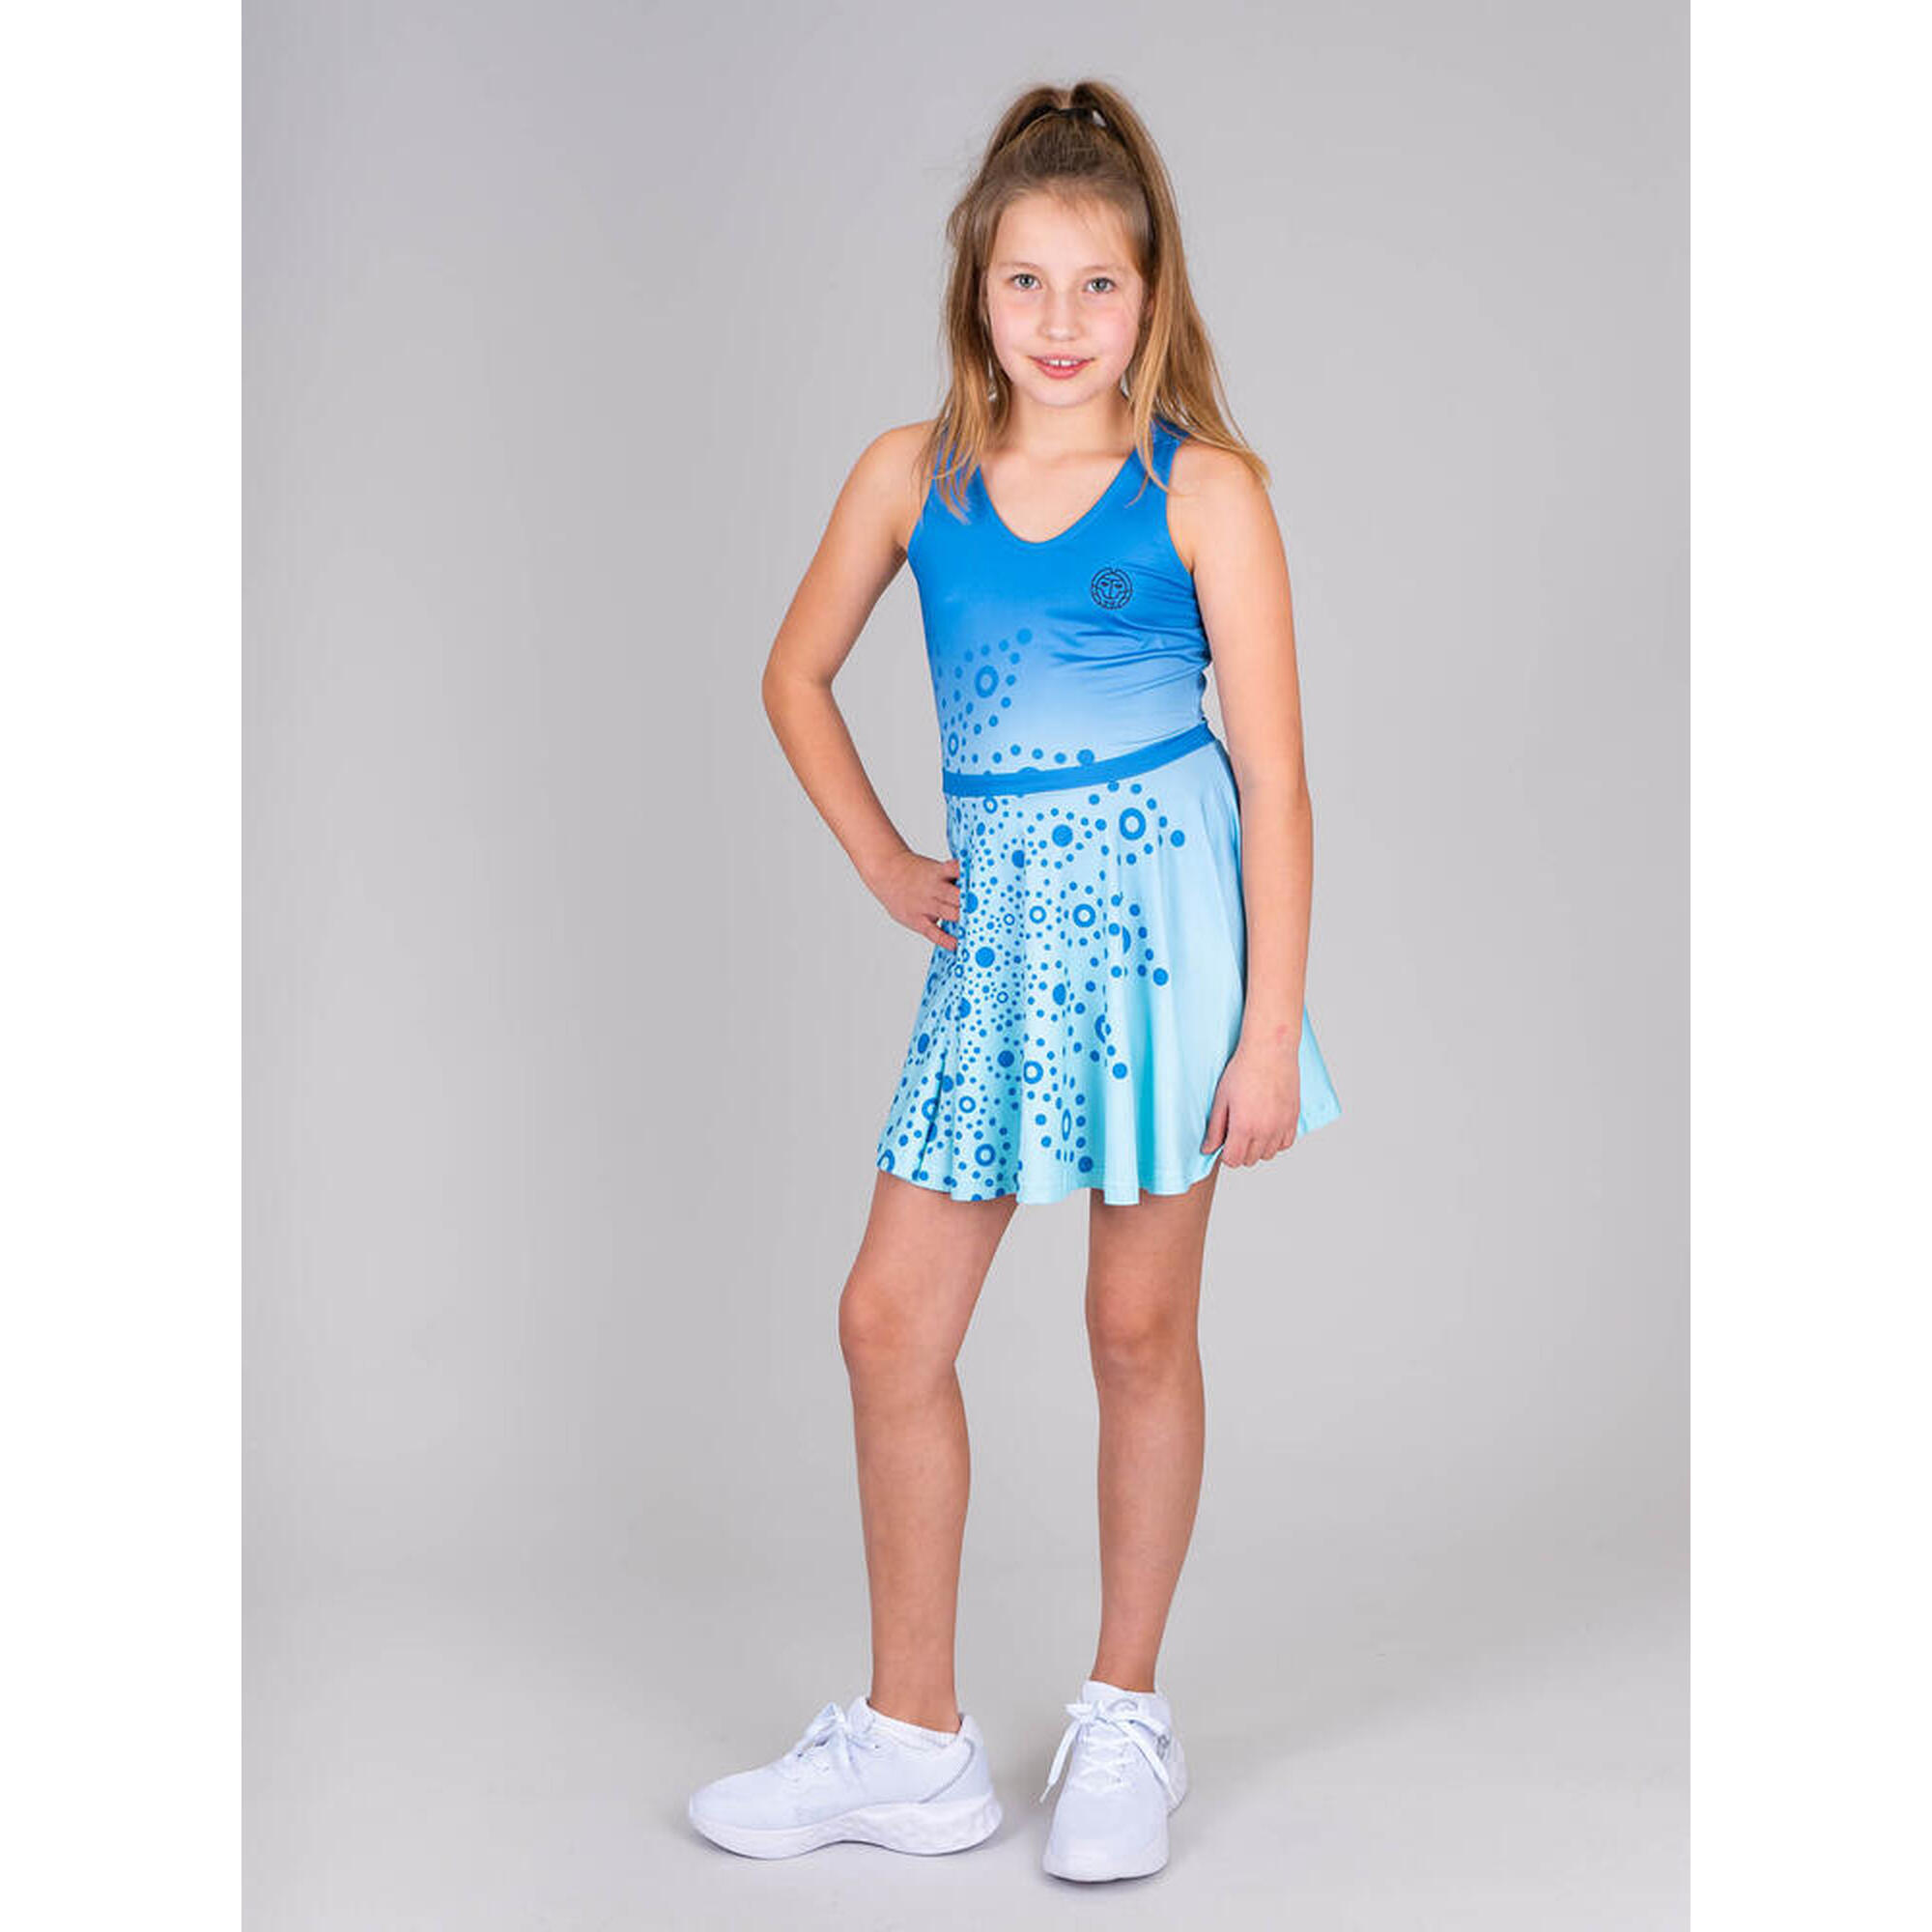 Colortwist Junior Dress - aqua/ blue